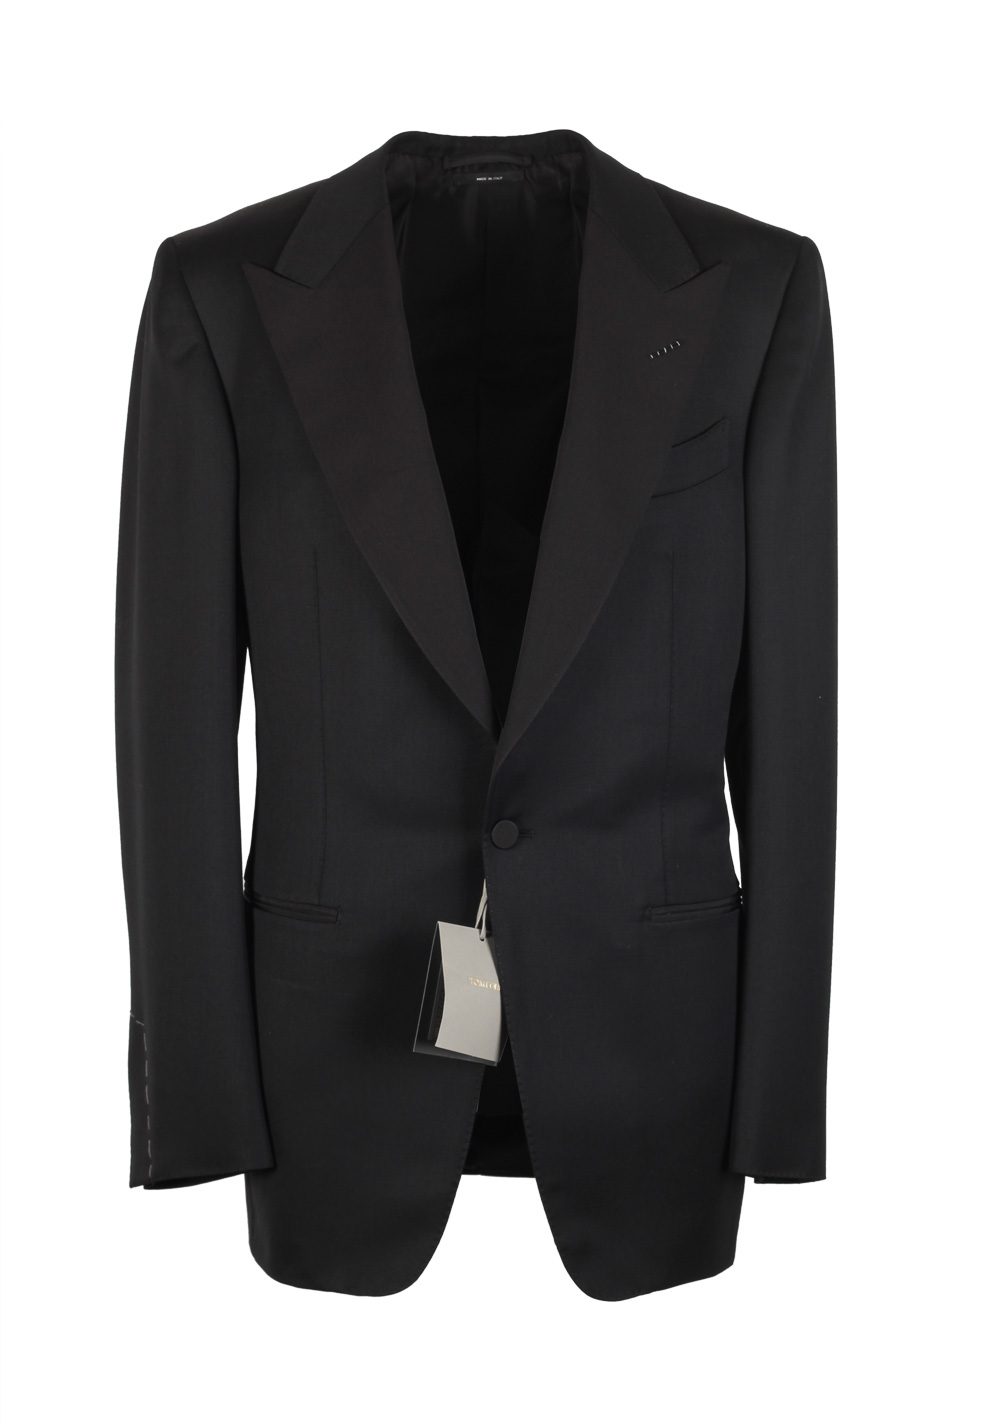 TOM FORD Windsor Black Tuxedo Smoking Suit Size 52L / 42L U.S. Fit A ...